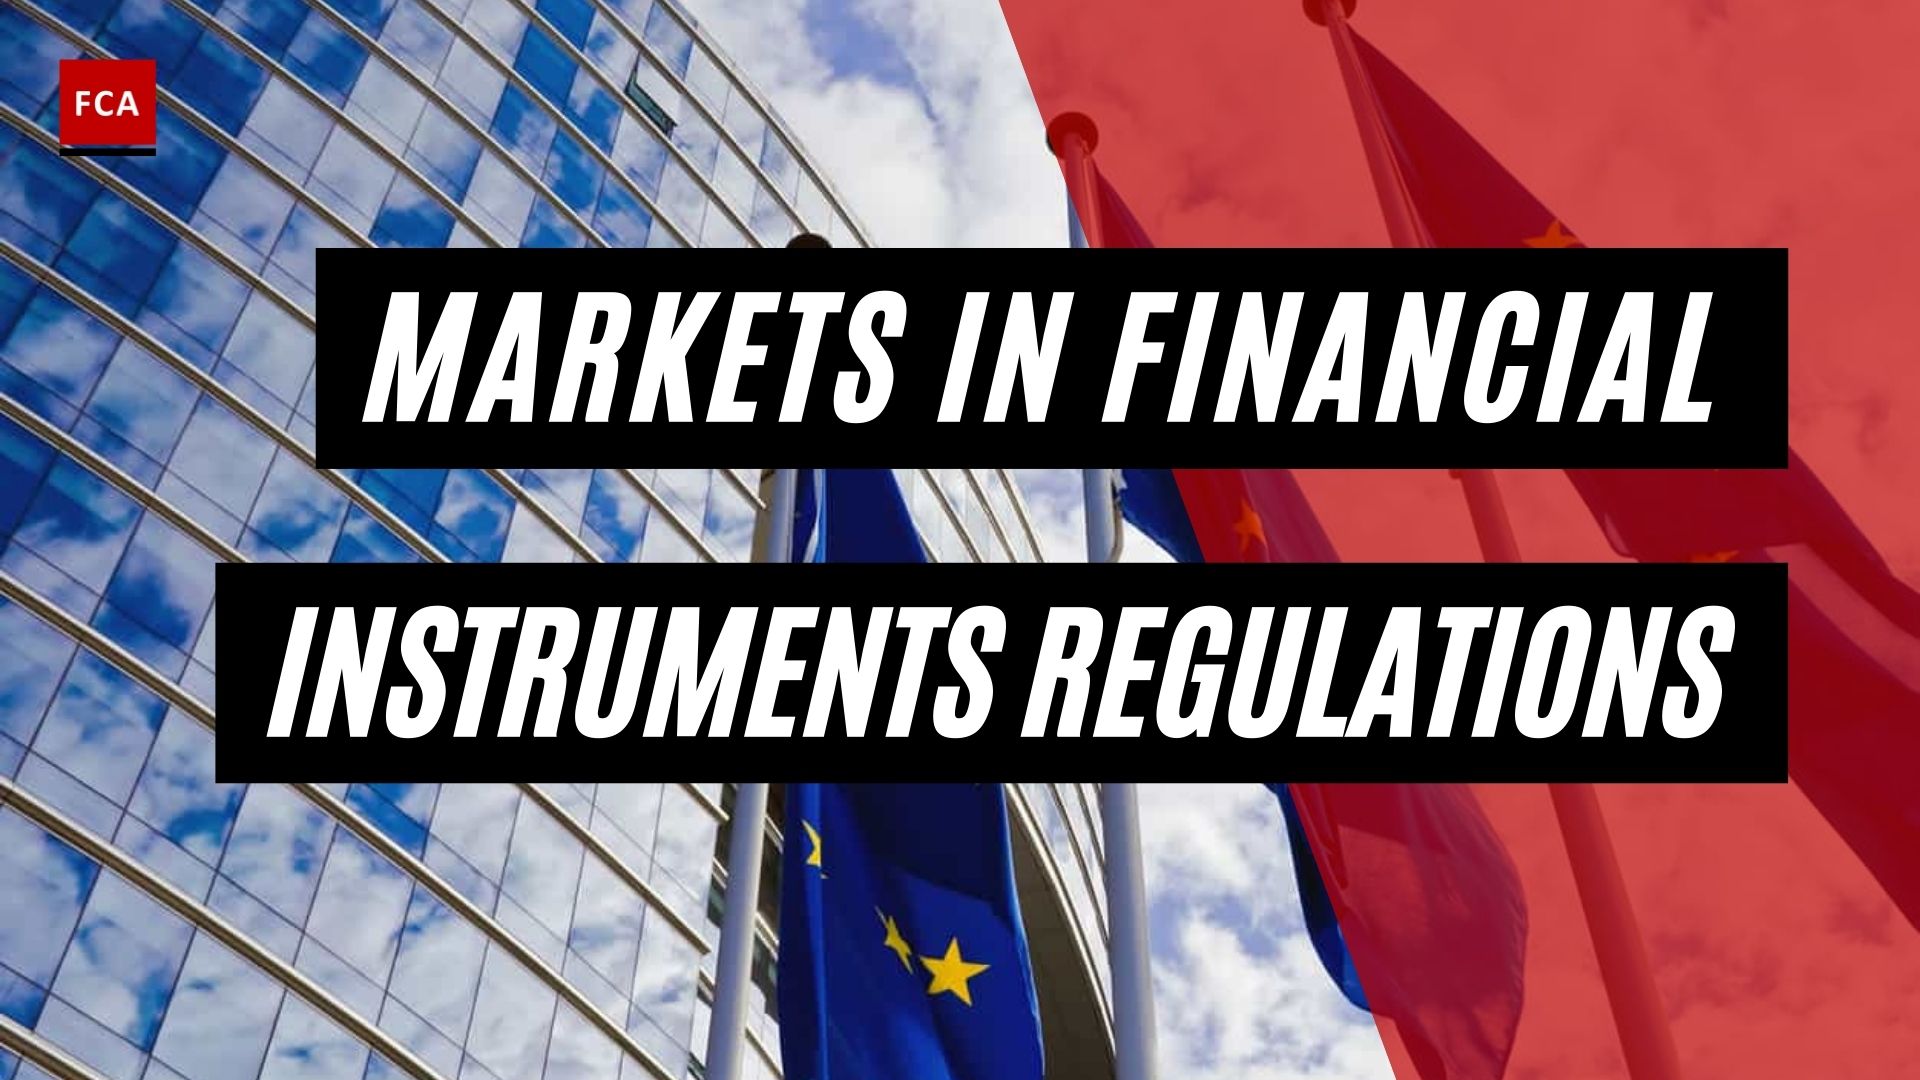 Markets In Financial Instruments Regulations